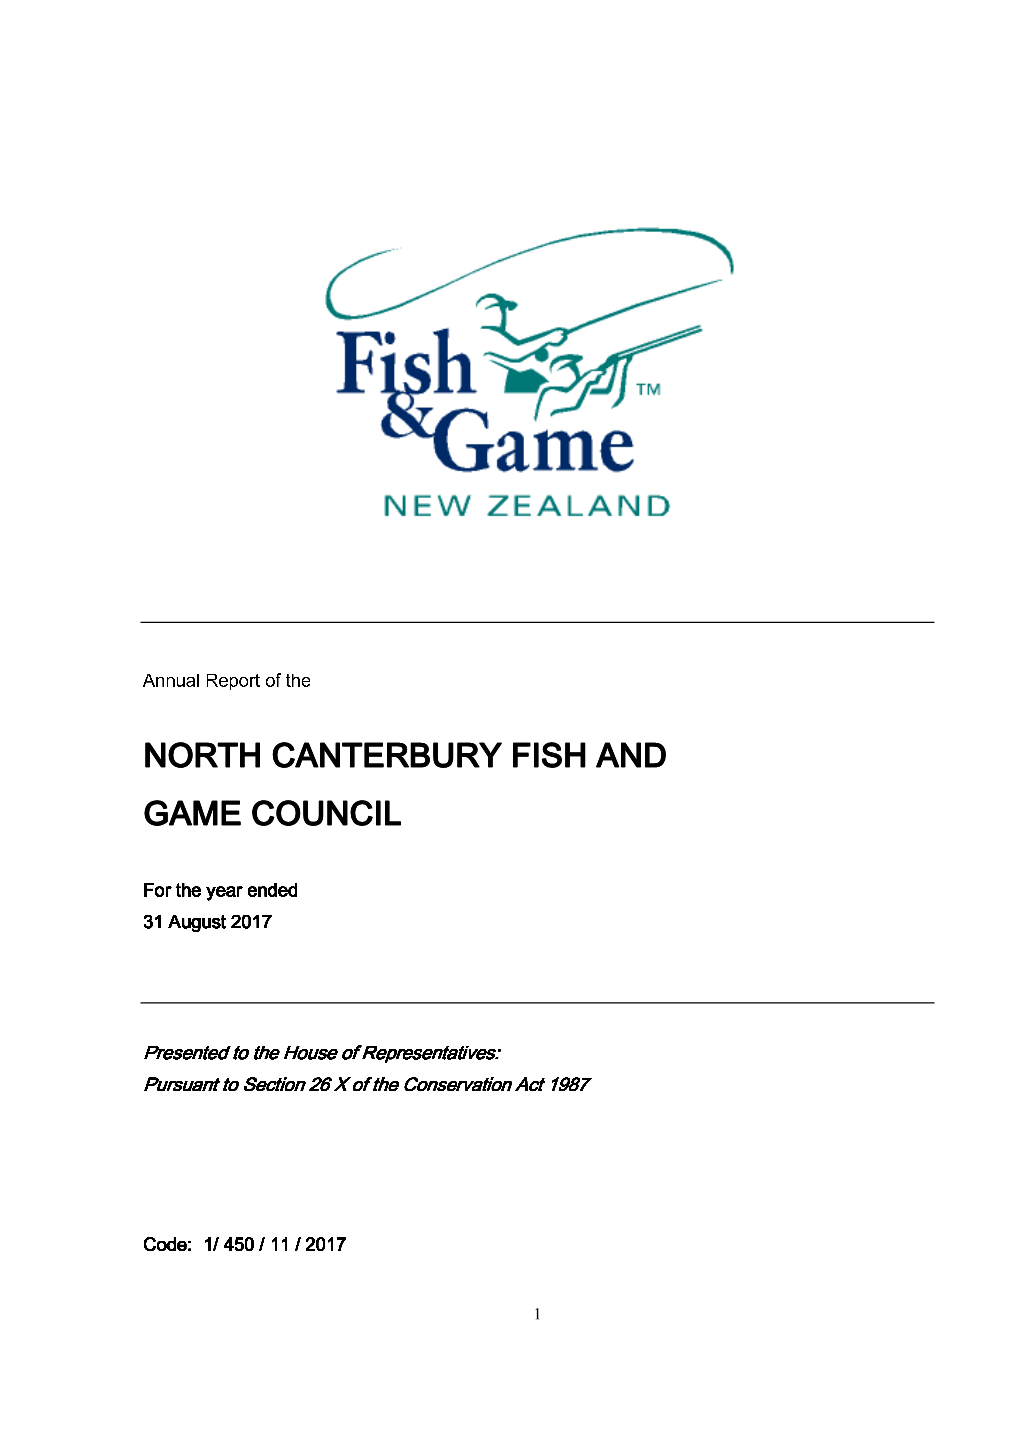 North Canterbury Fish and Game Council